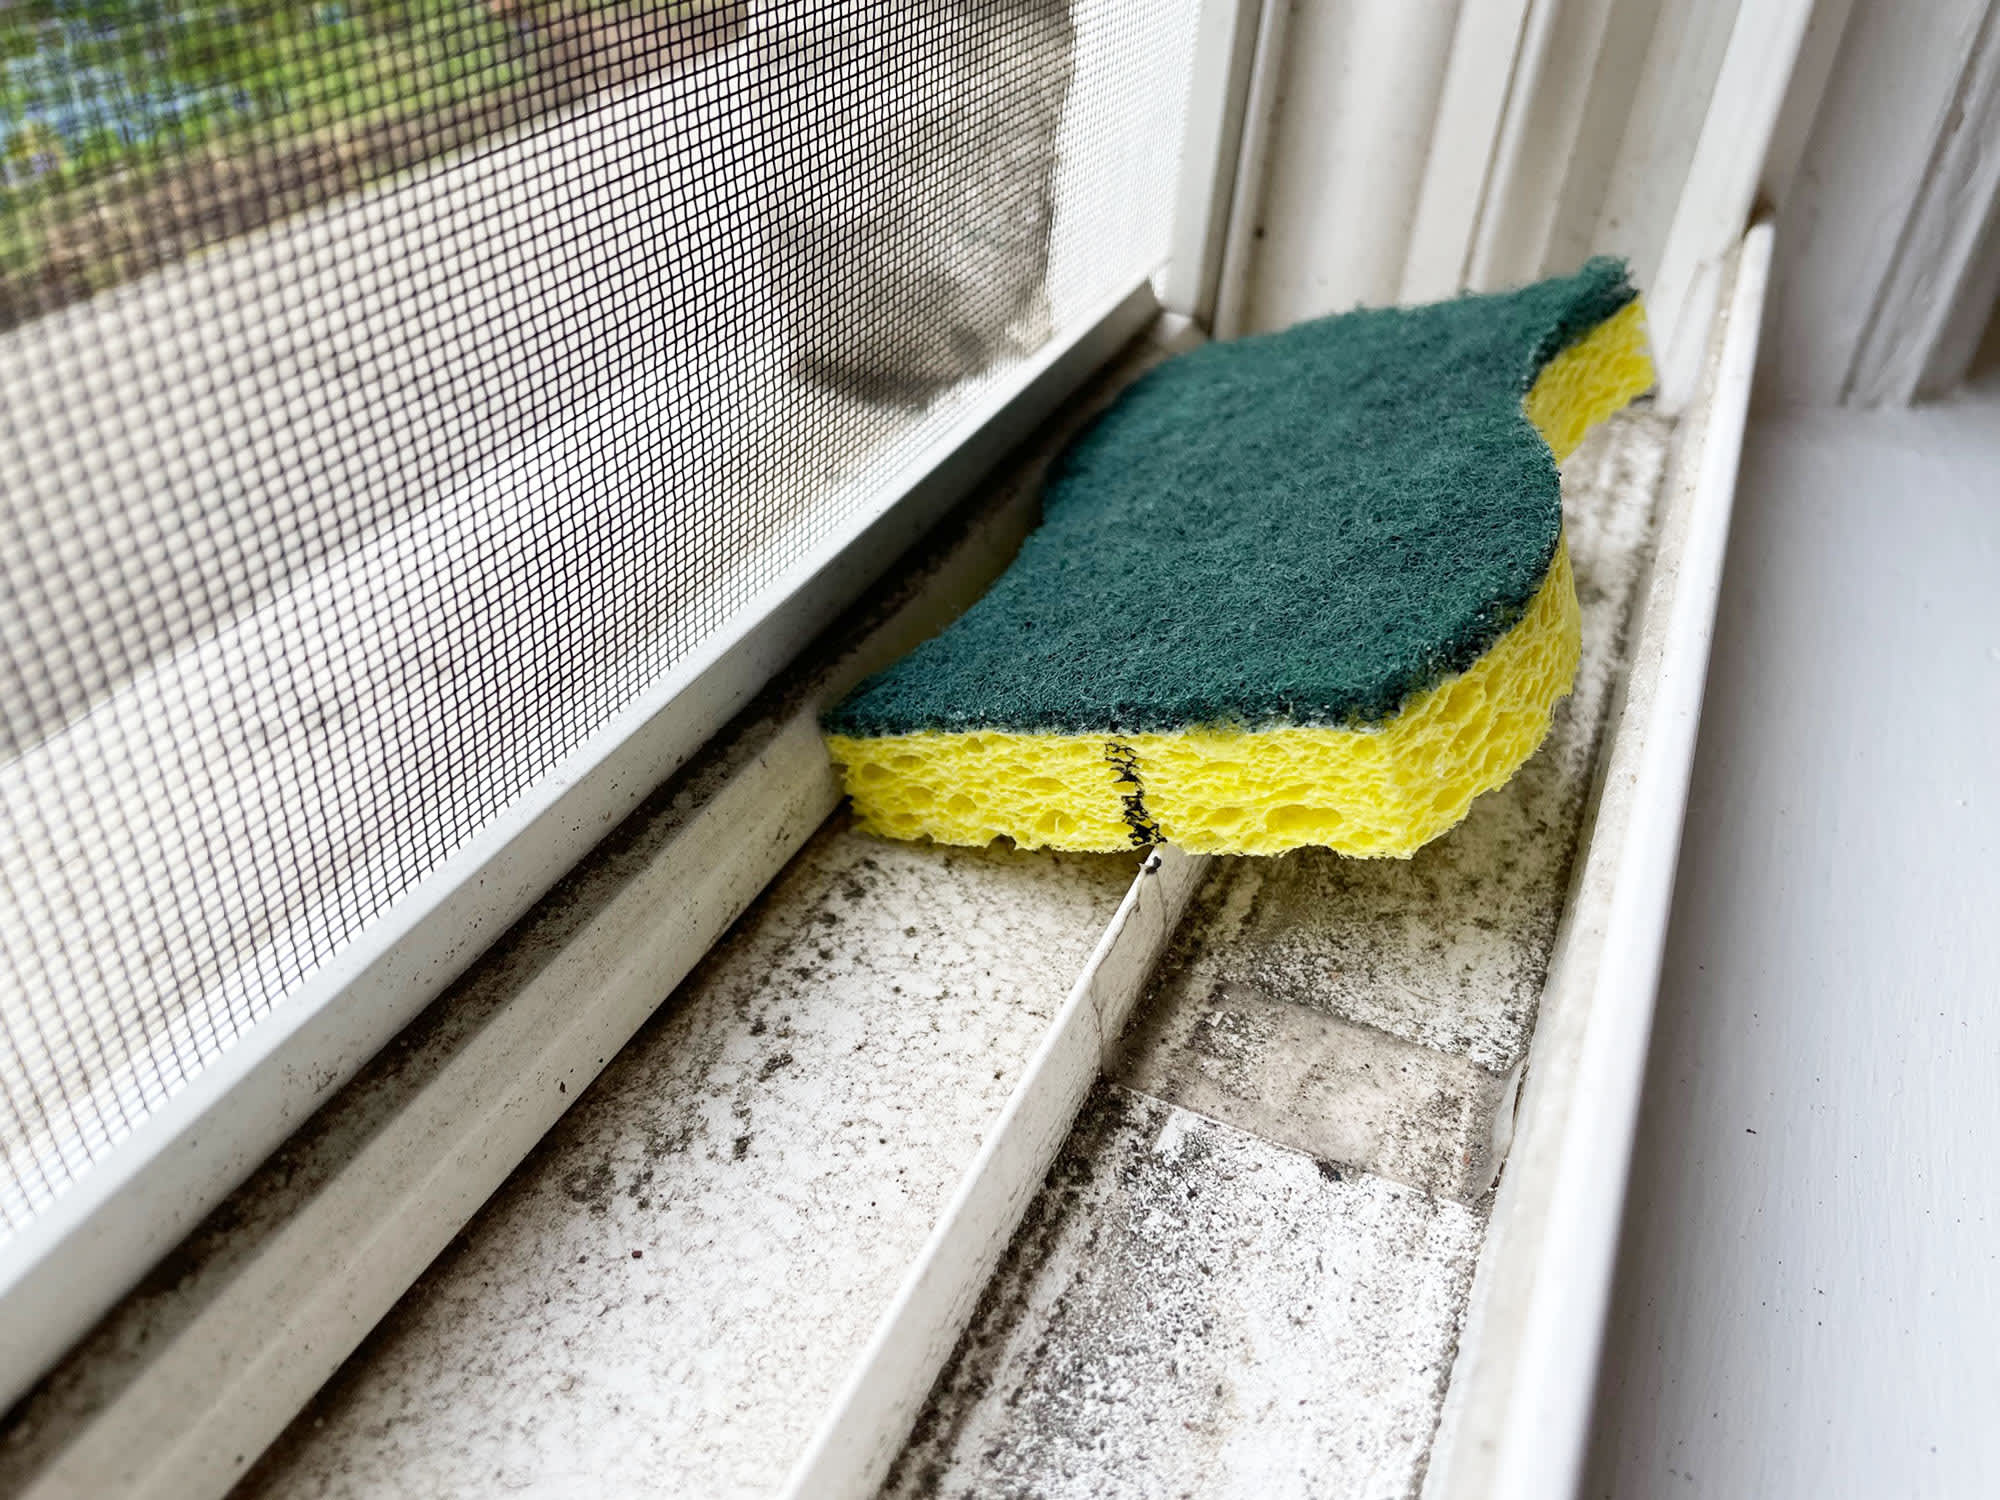 https://cdn.apartmenttherapy.info/image/upload/v1618505047/at/organize-clean/window-sponge-1.jpg